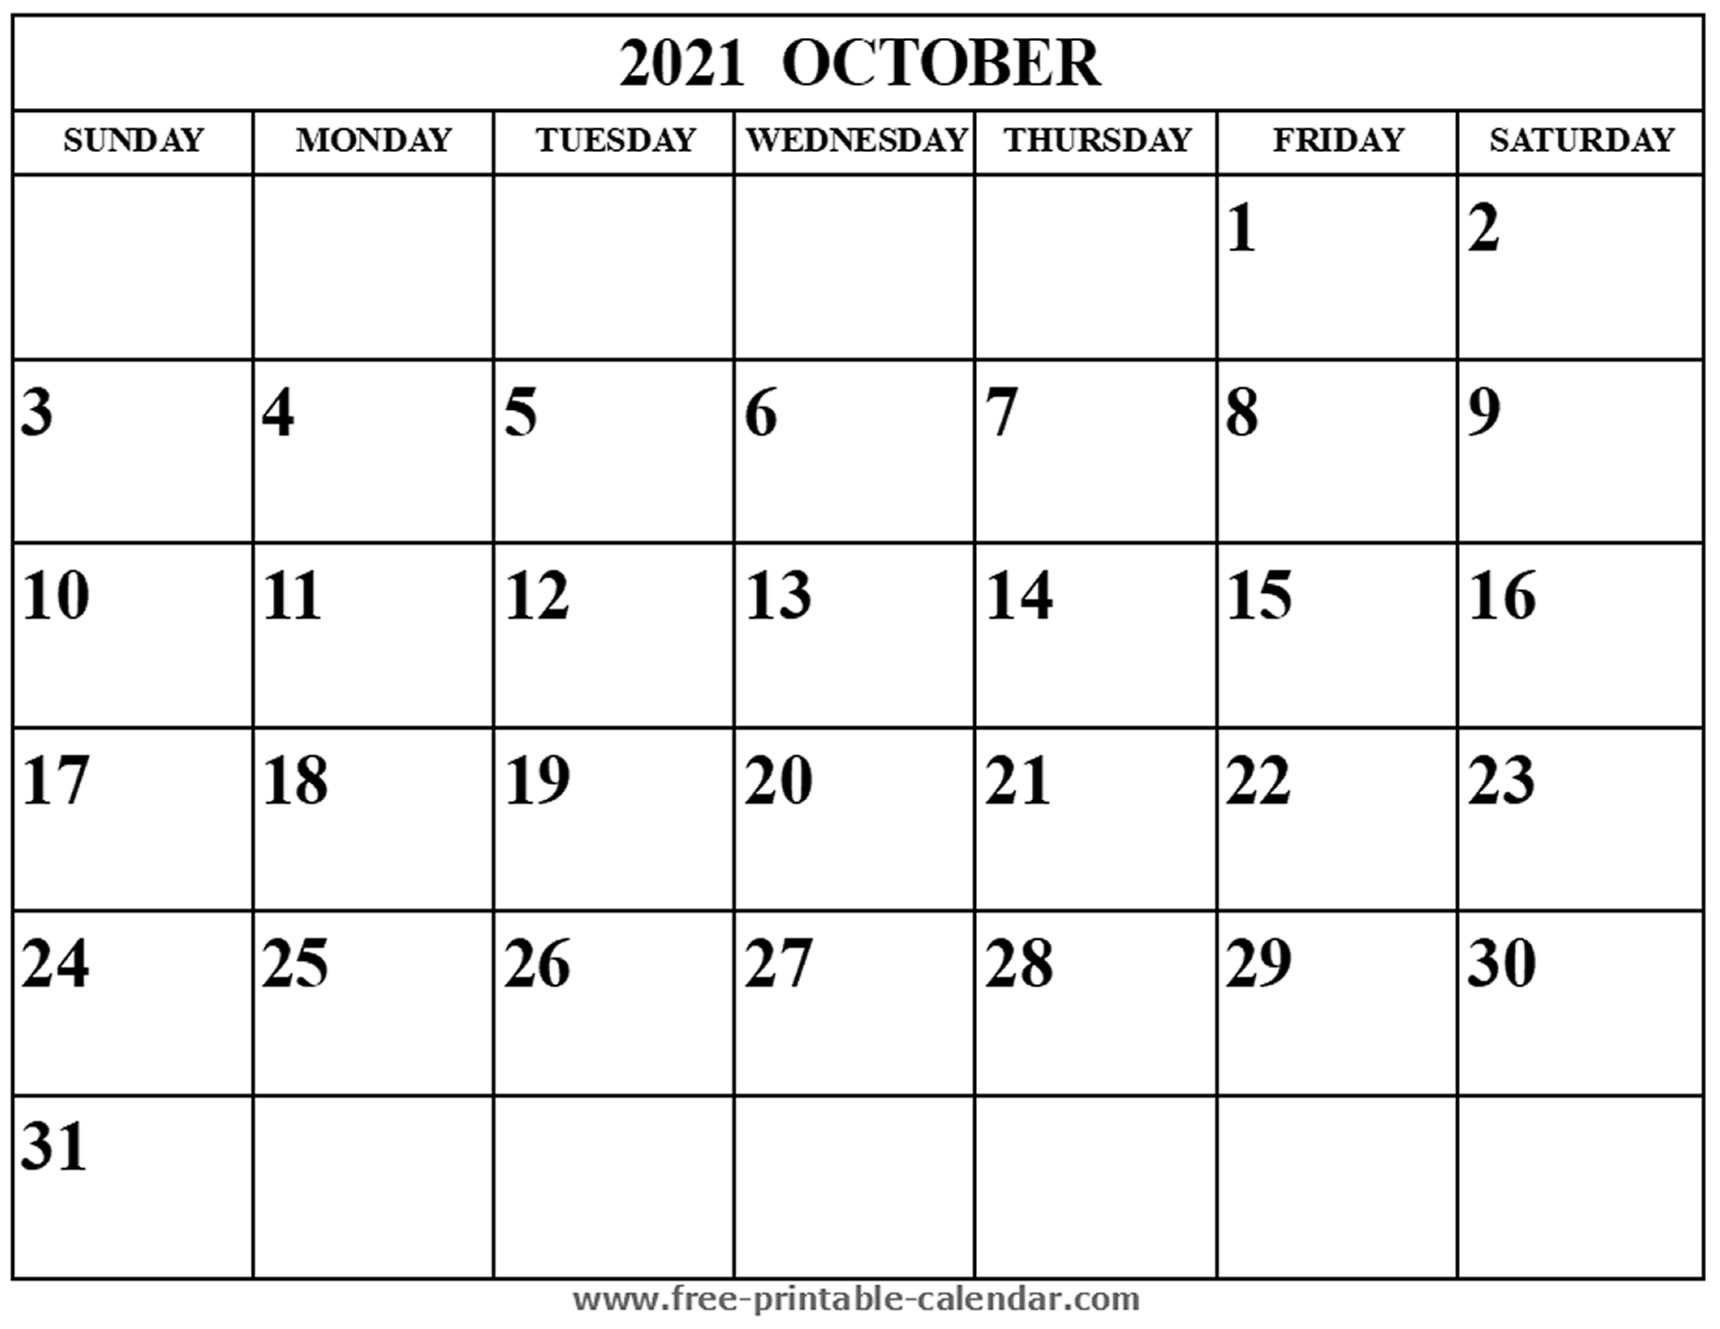 Blank October 2021 Calendar - Free-Printable-Calendar-Blank Calendar 2021 Printable Monthly